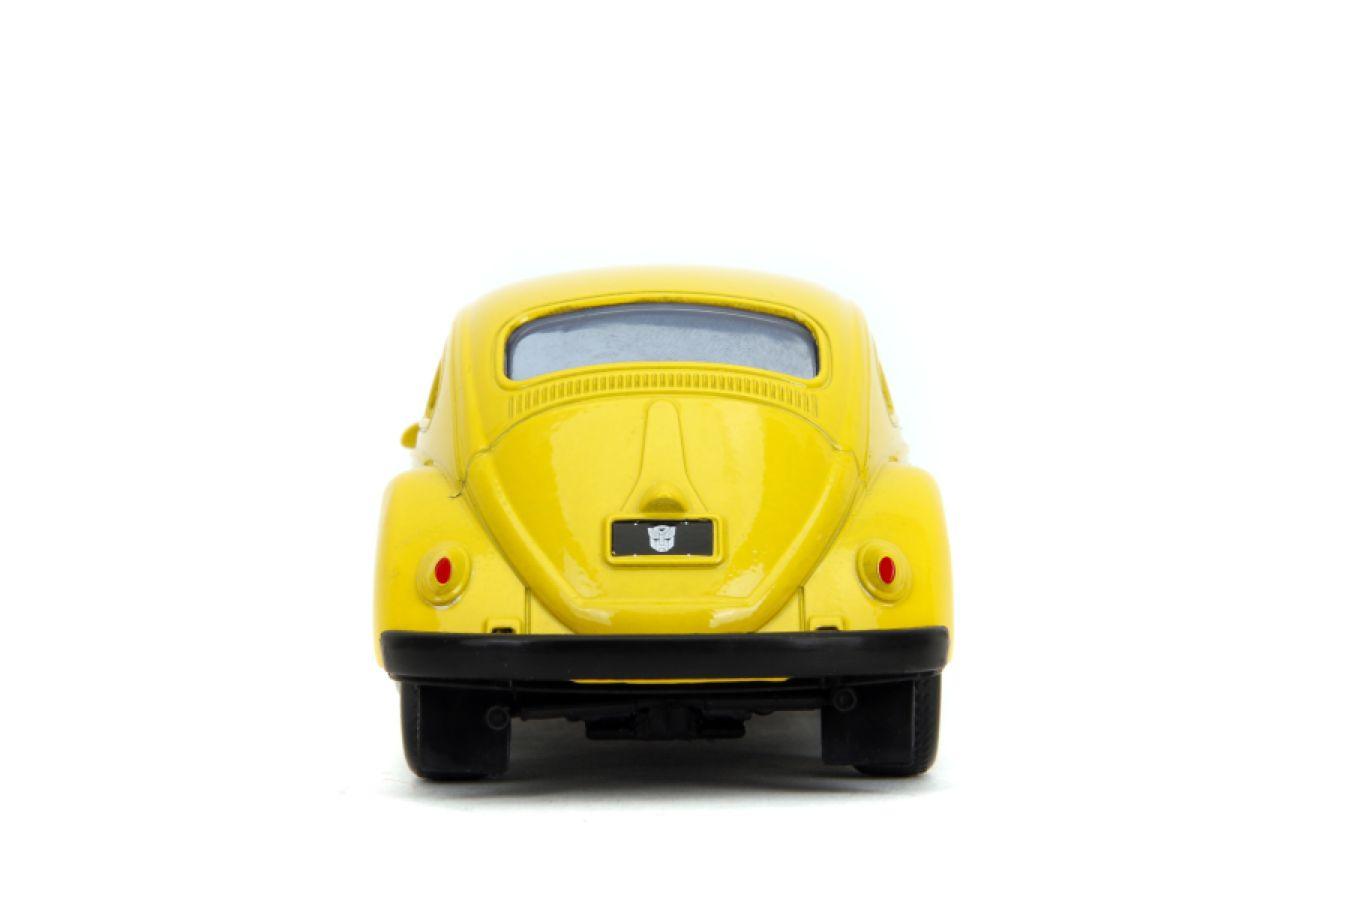 JAD35595 Transformers - G1 Bumblebee VW Beetle 1:32 Scale Diecast Vehicle - Jada Toys - Titan Pop Culture